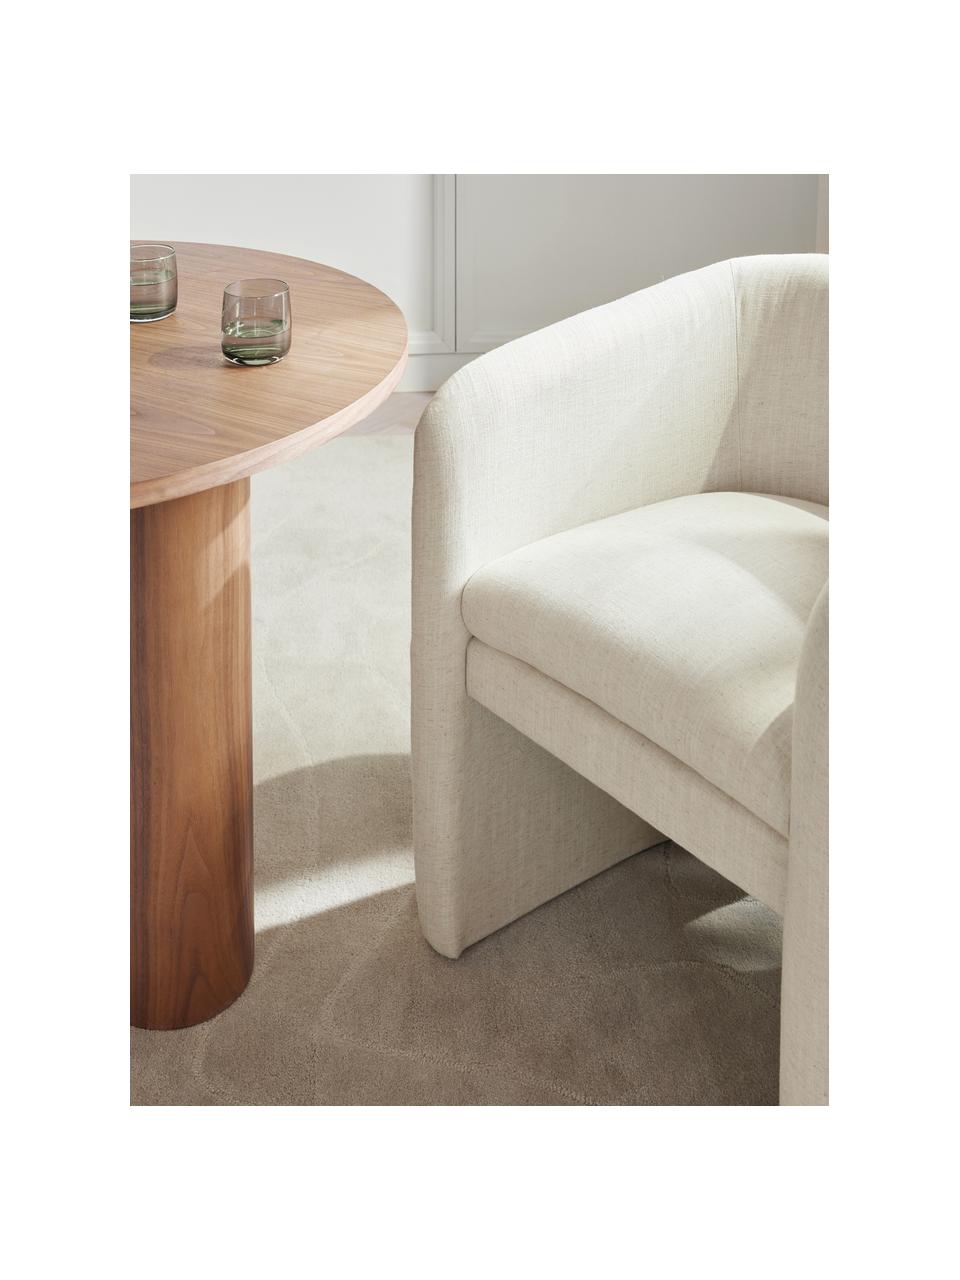 Chaise à accoudoirs Mairo, Tissu beige, larg. 62 x haut. 77 cm